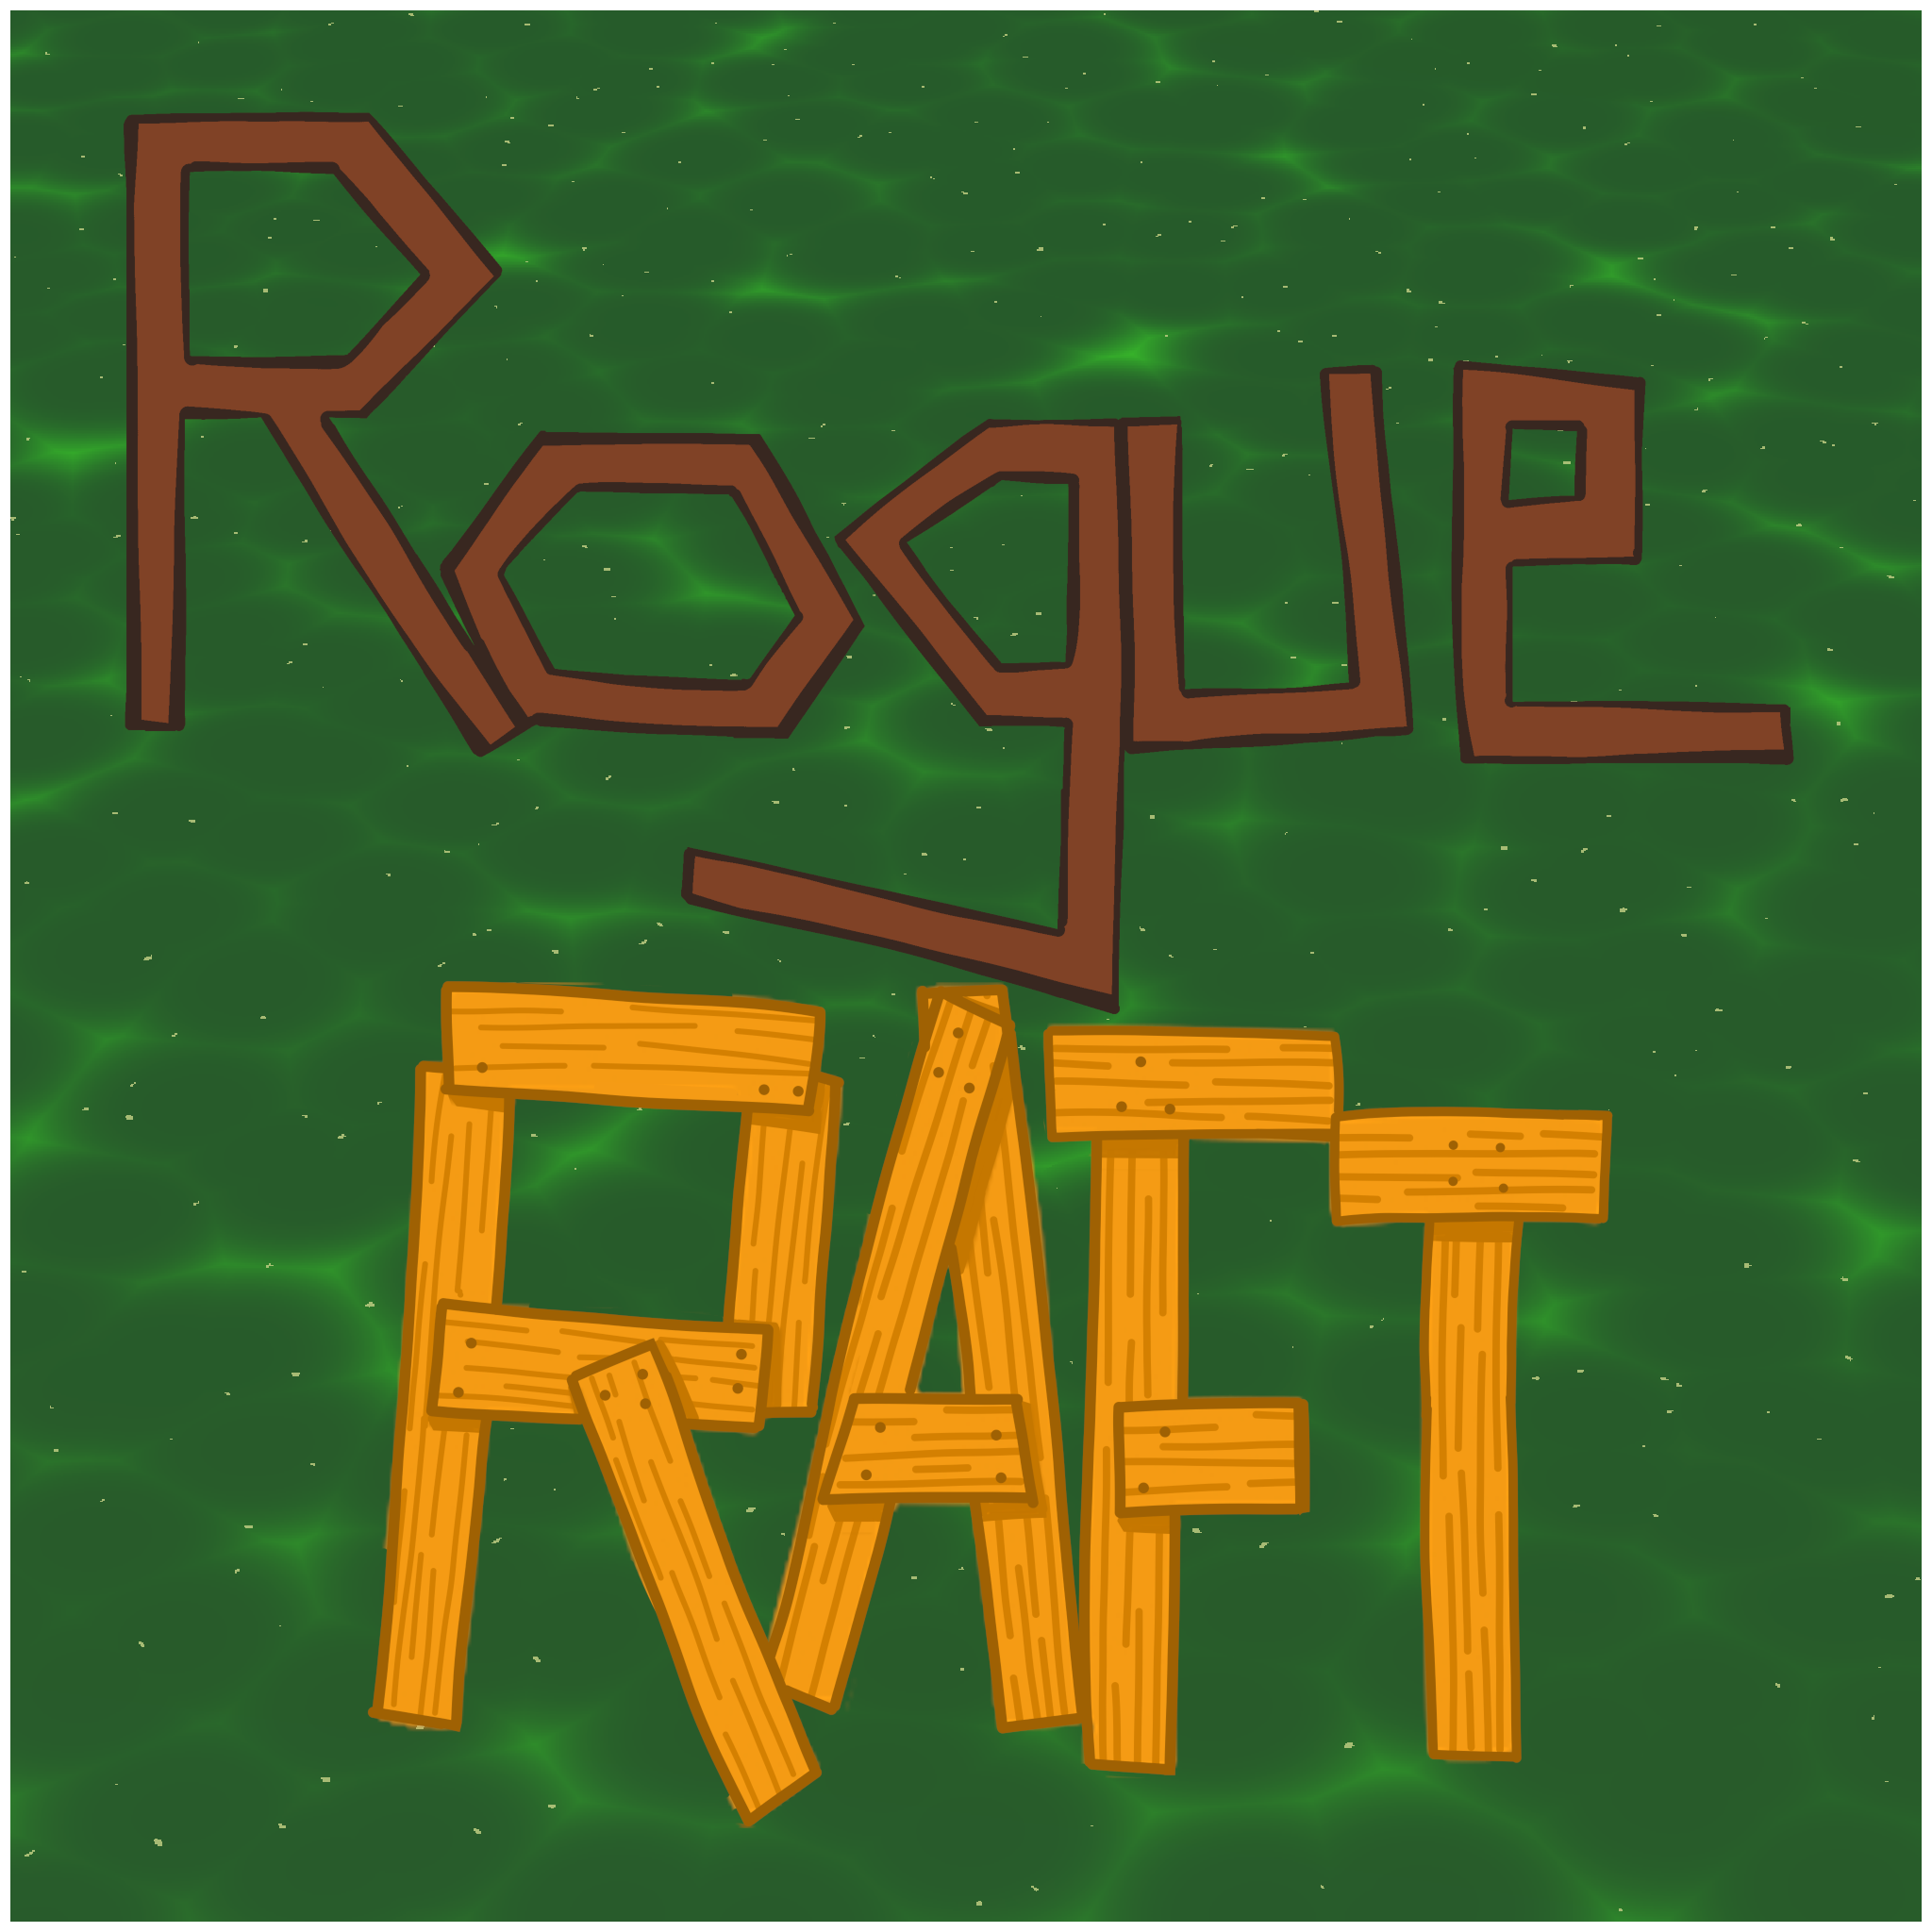 Rogue Raft